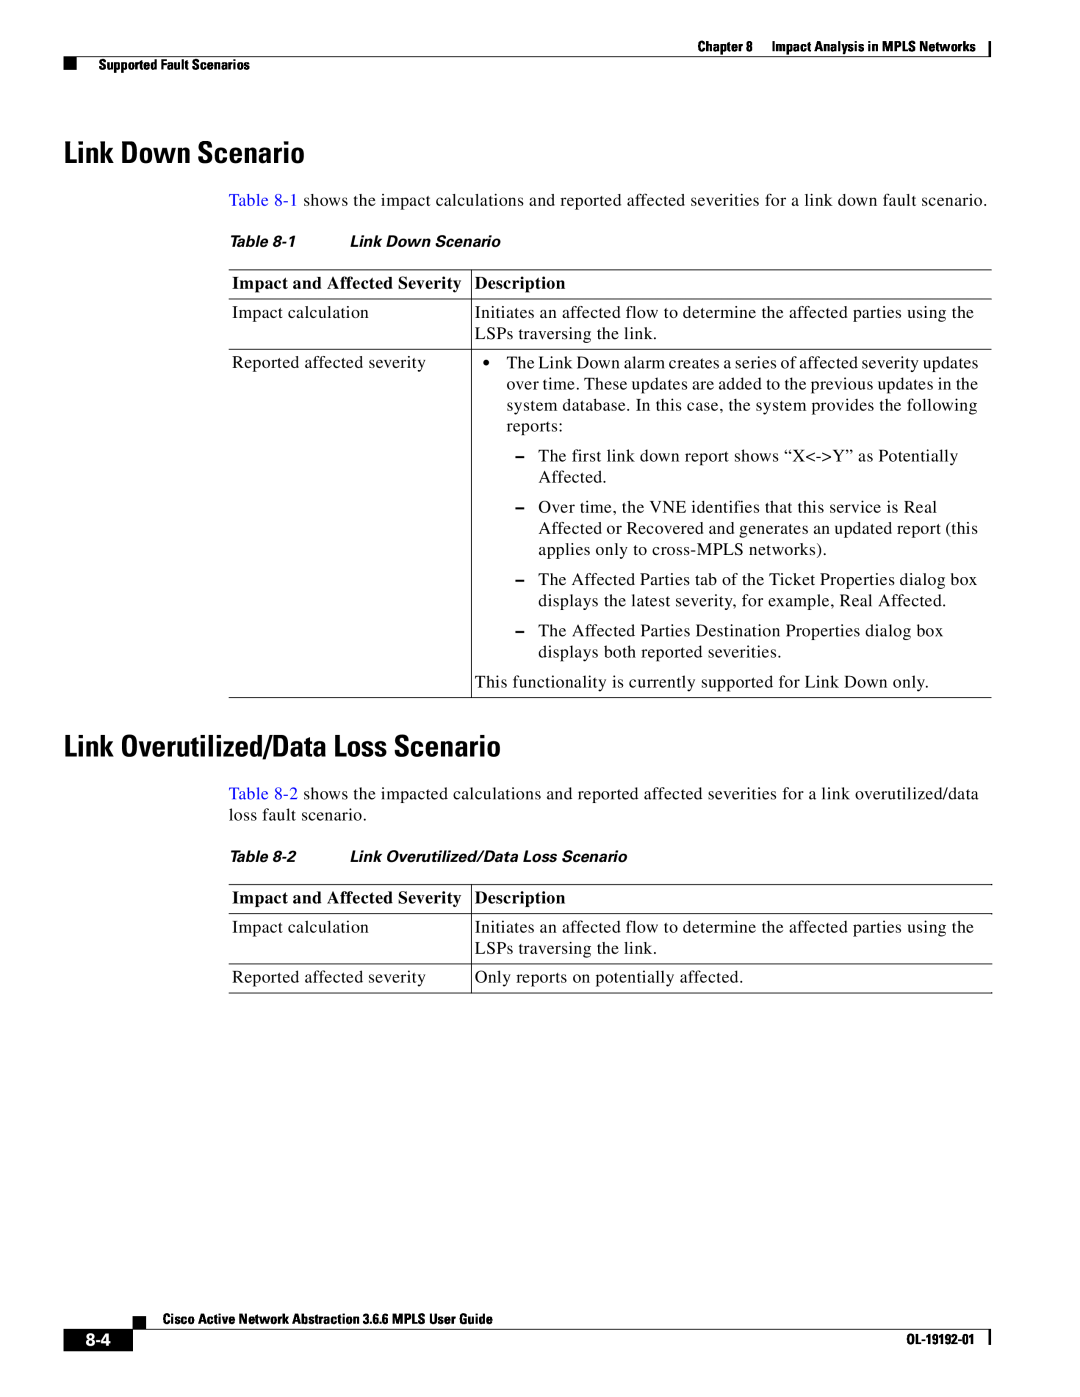 Cisco Systems 3.6.6 Link Down Scenario, Link Overutilized/Data Loss Scenario, Impact and Affected Severity, Description 